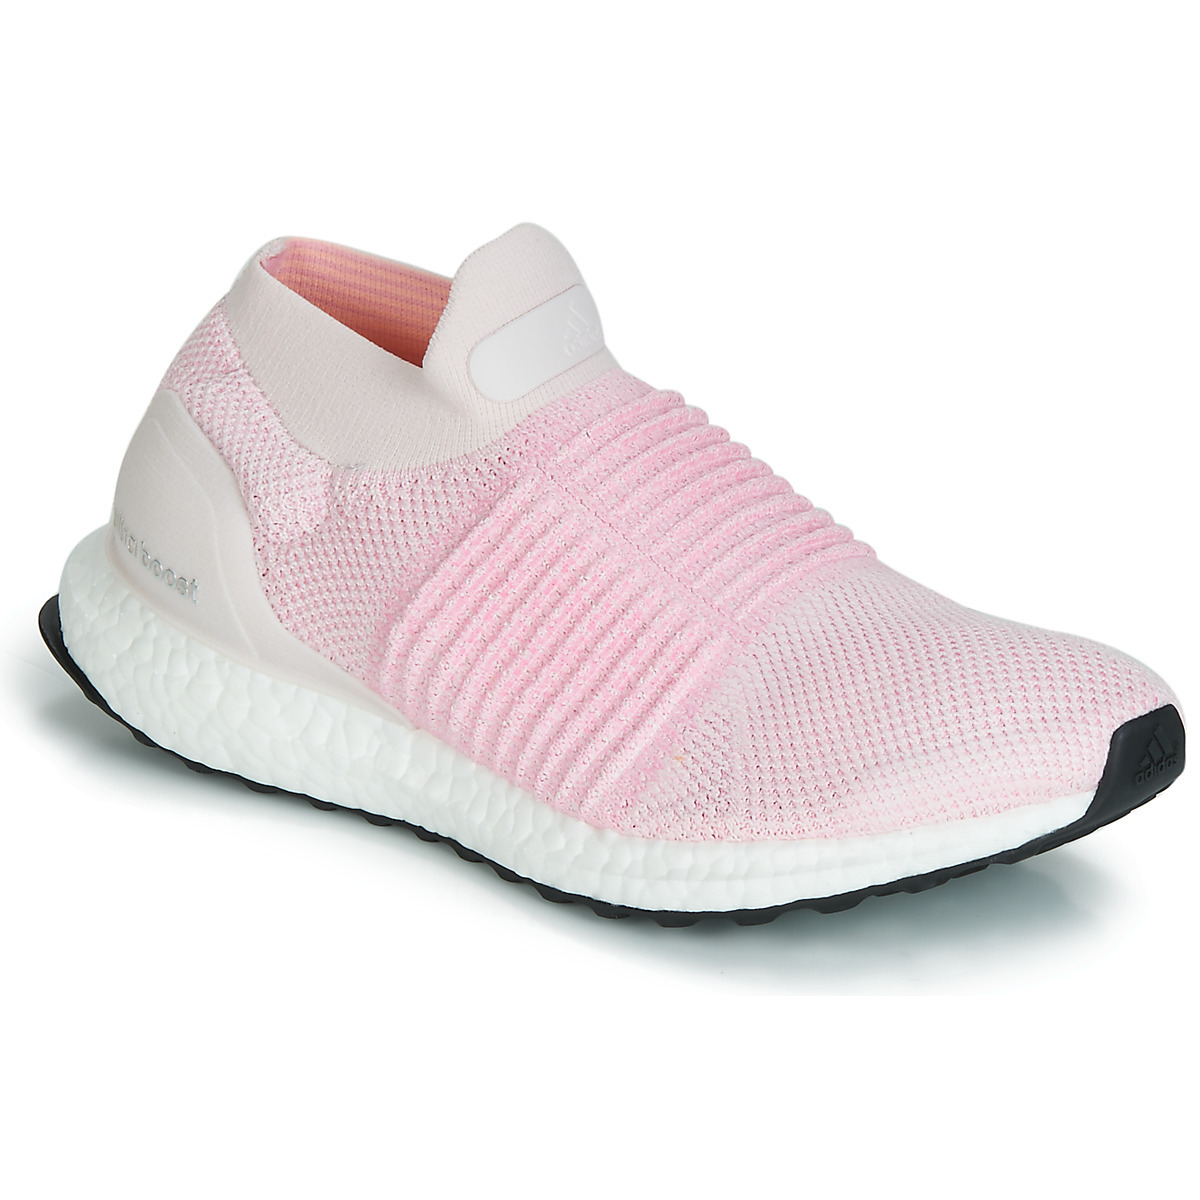 Adidas - Women Running Shoes in Pink - Spartoo GOOFASH